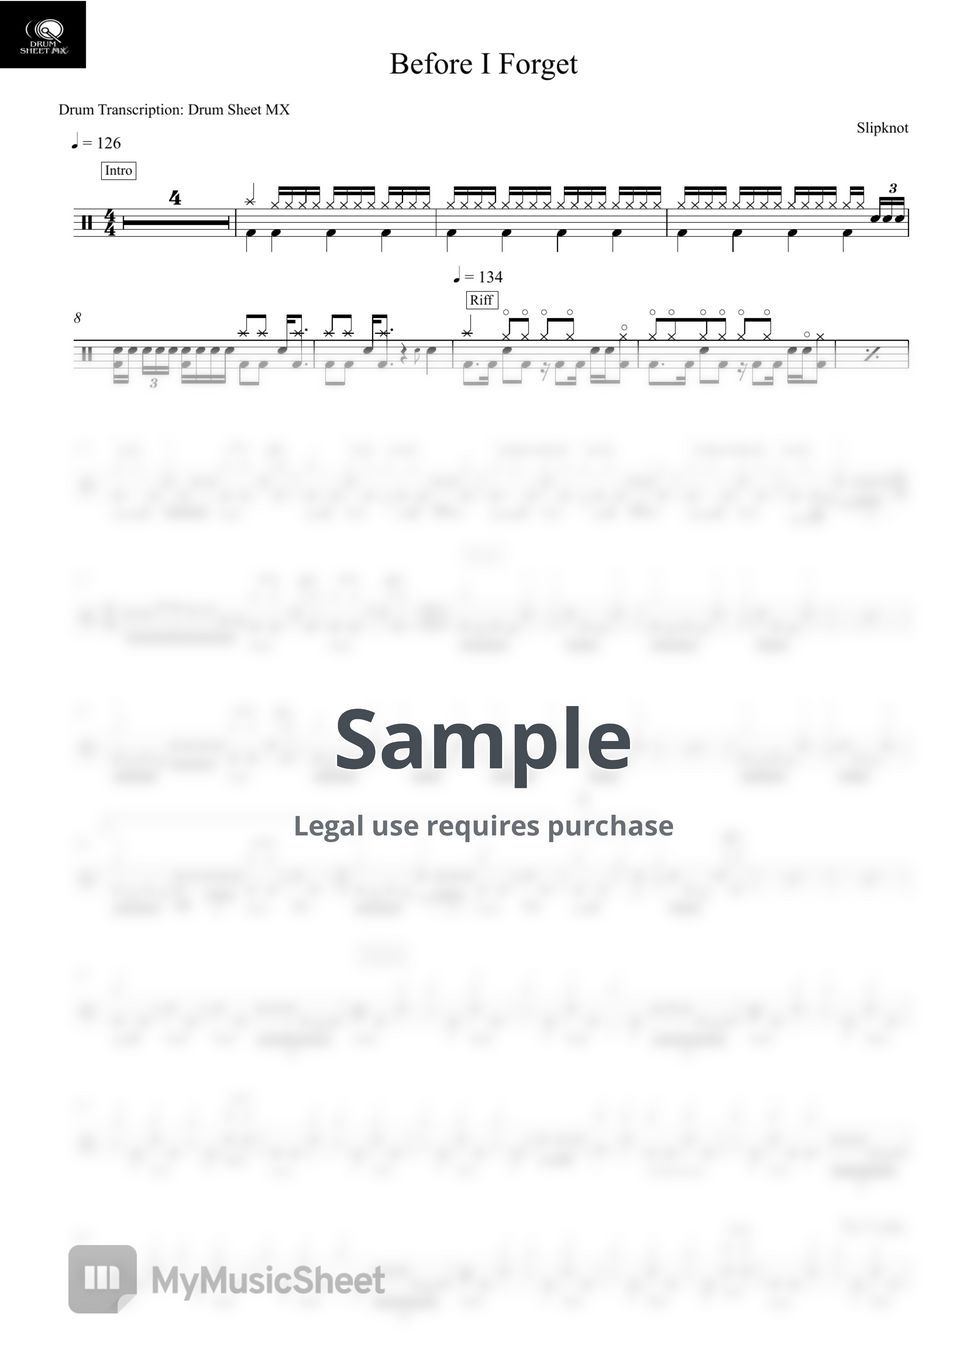 Slipknot - Before I Forget by Drum Transcription: Drum Sheet MX